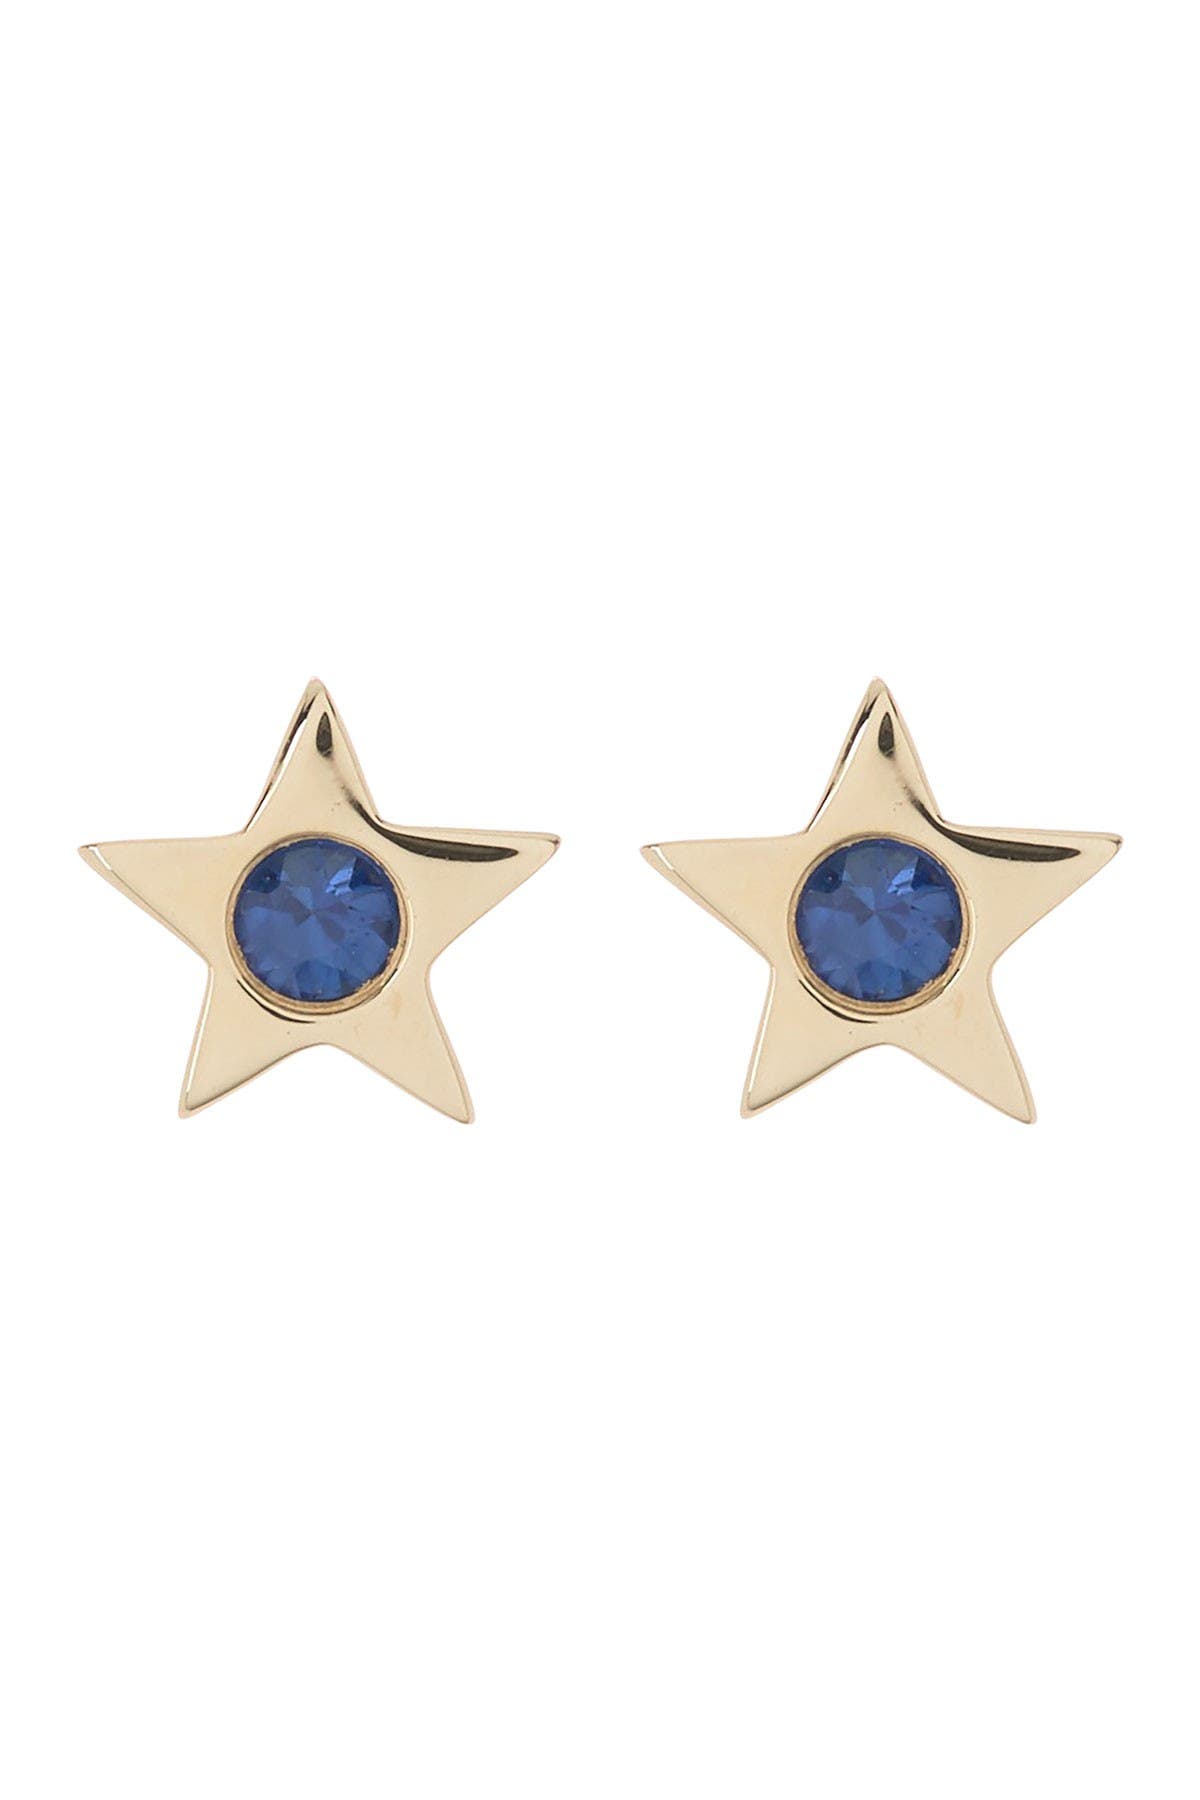 Ron Hami 14k Yellow Gold Blue Sapphire Star Stud Earrings